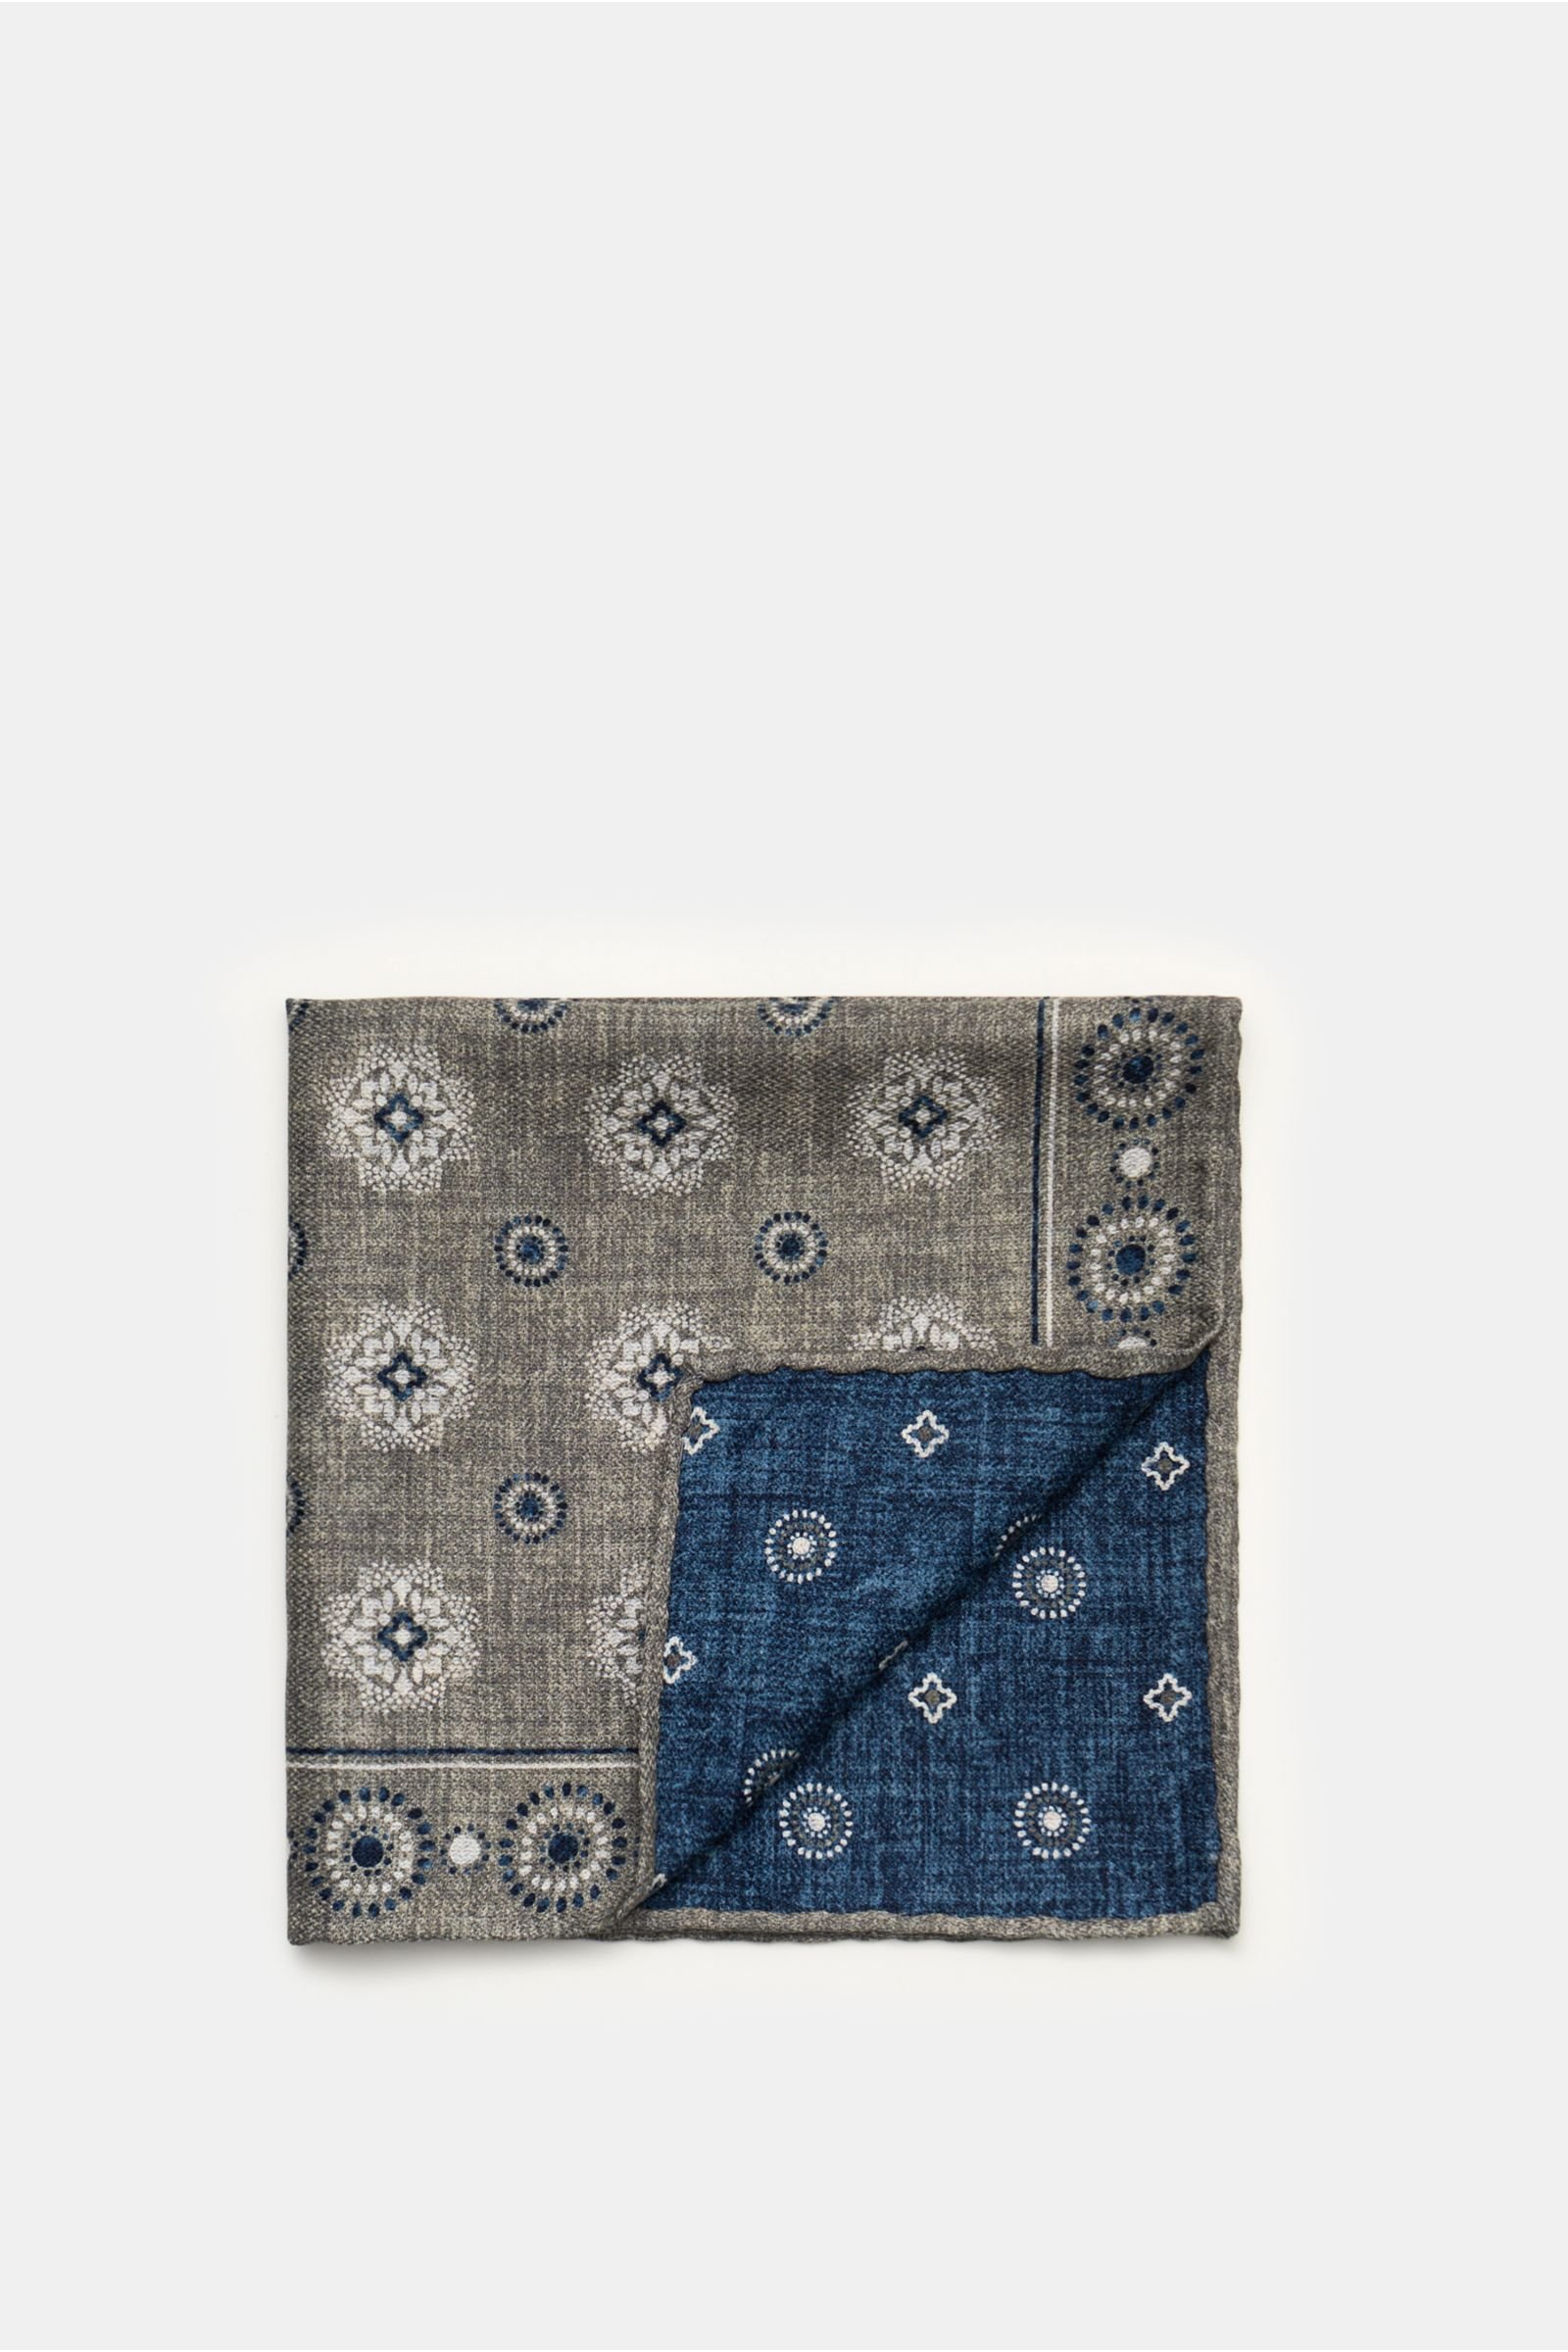 Pocket square grey/navy patterned